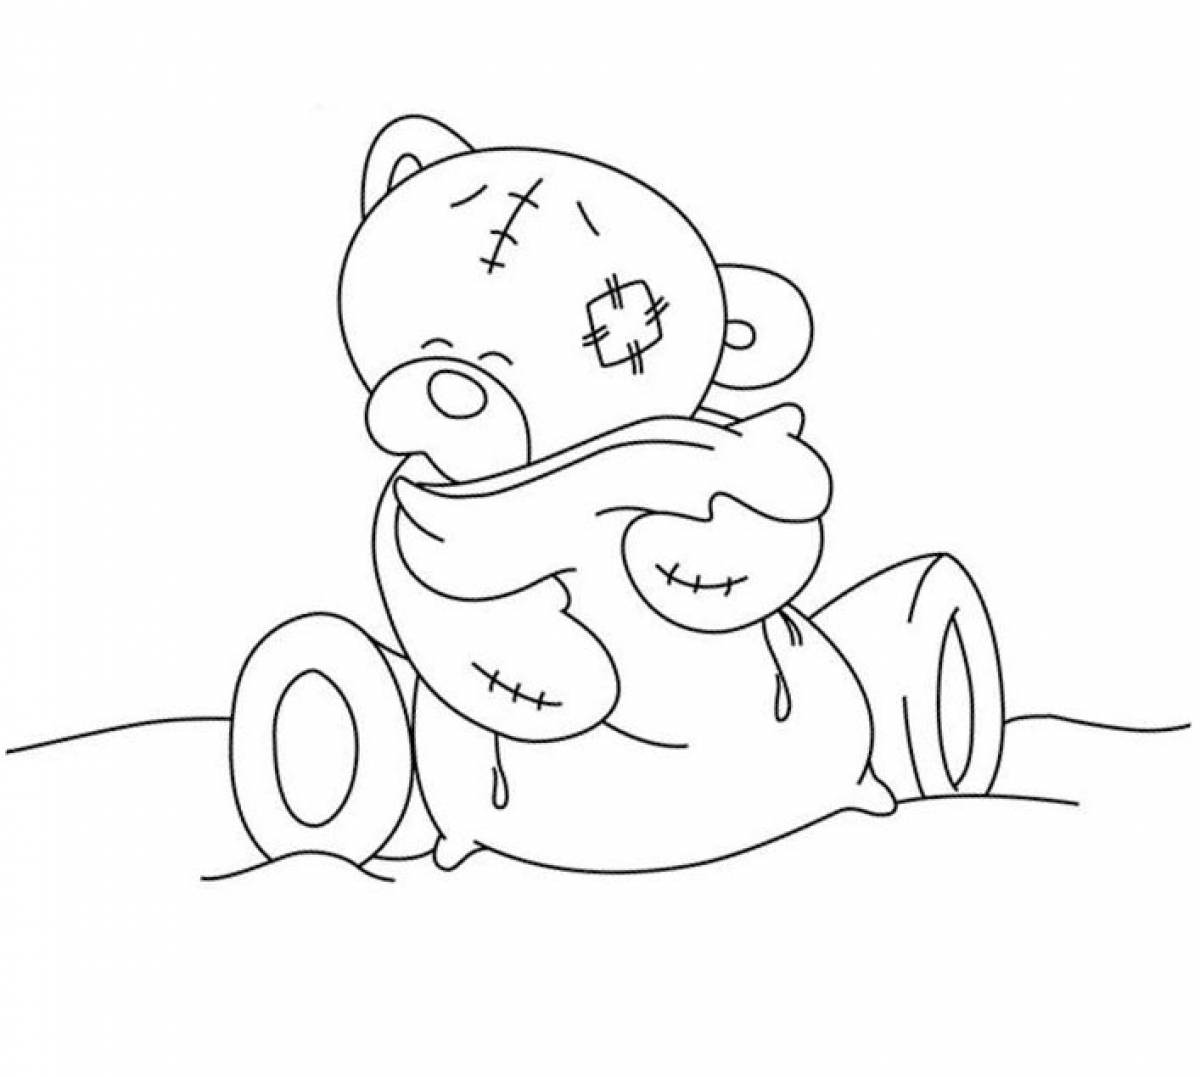 Мишка Тедди рисунок для срисовки